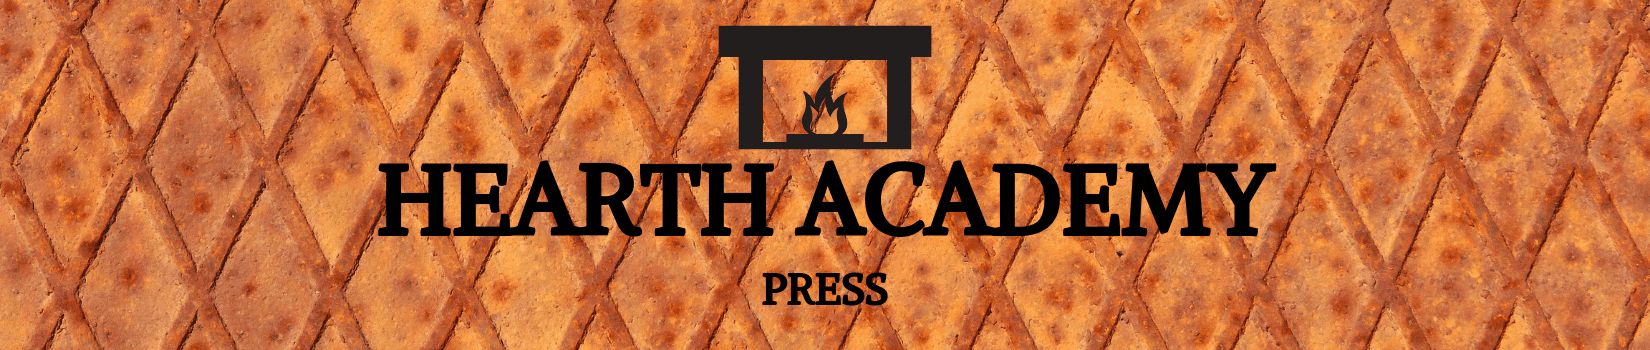 Hearth Academy Press